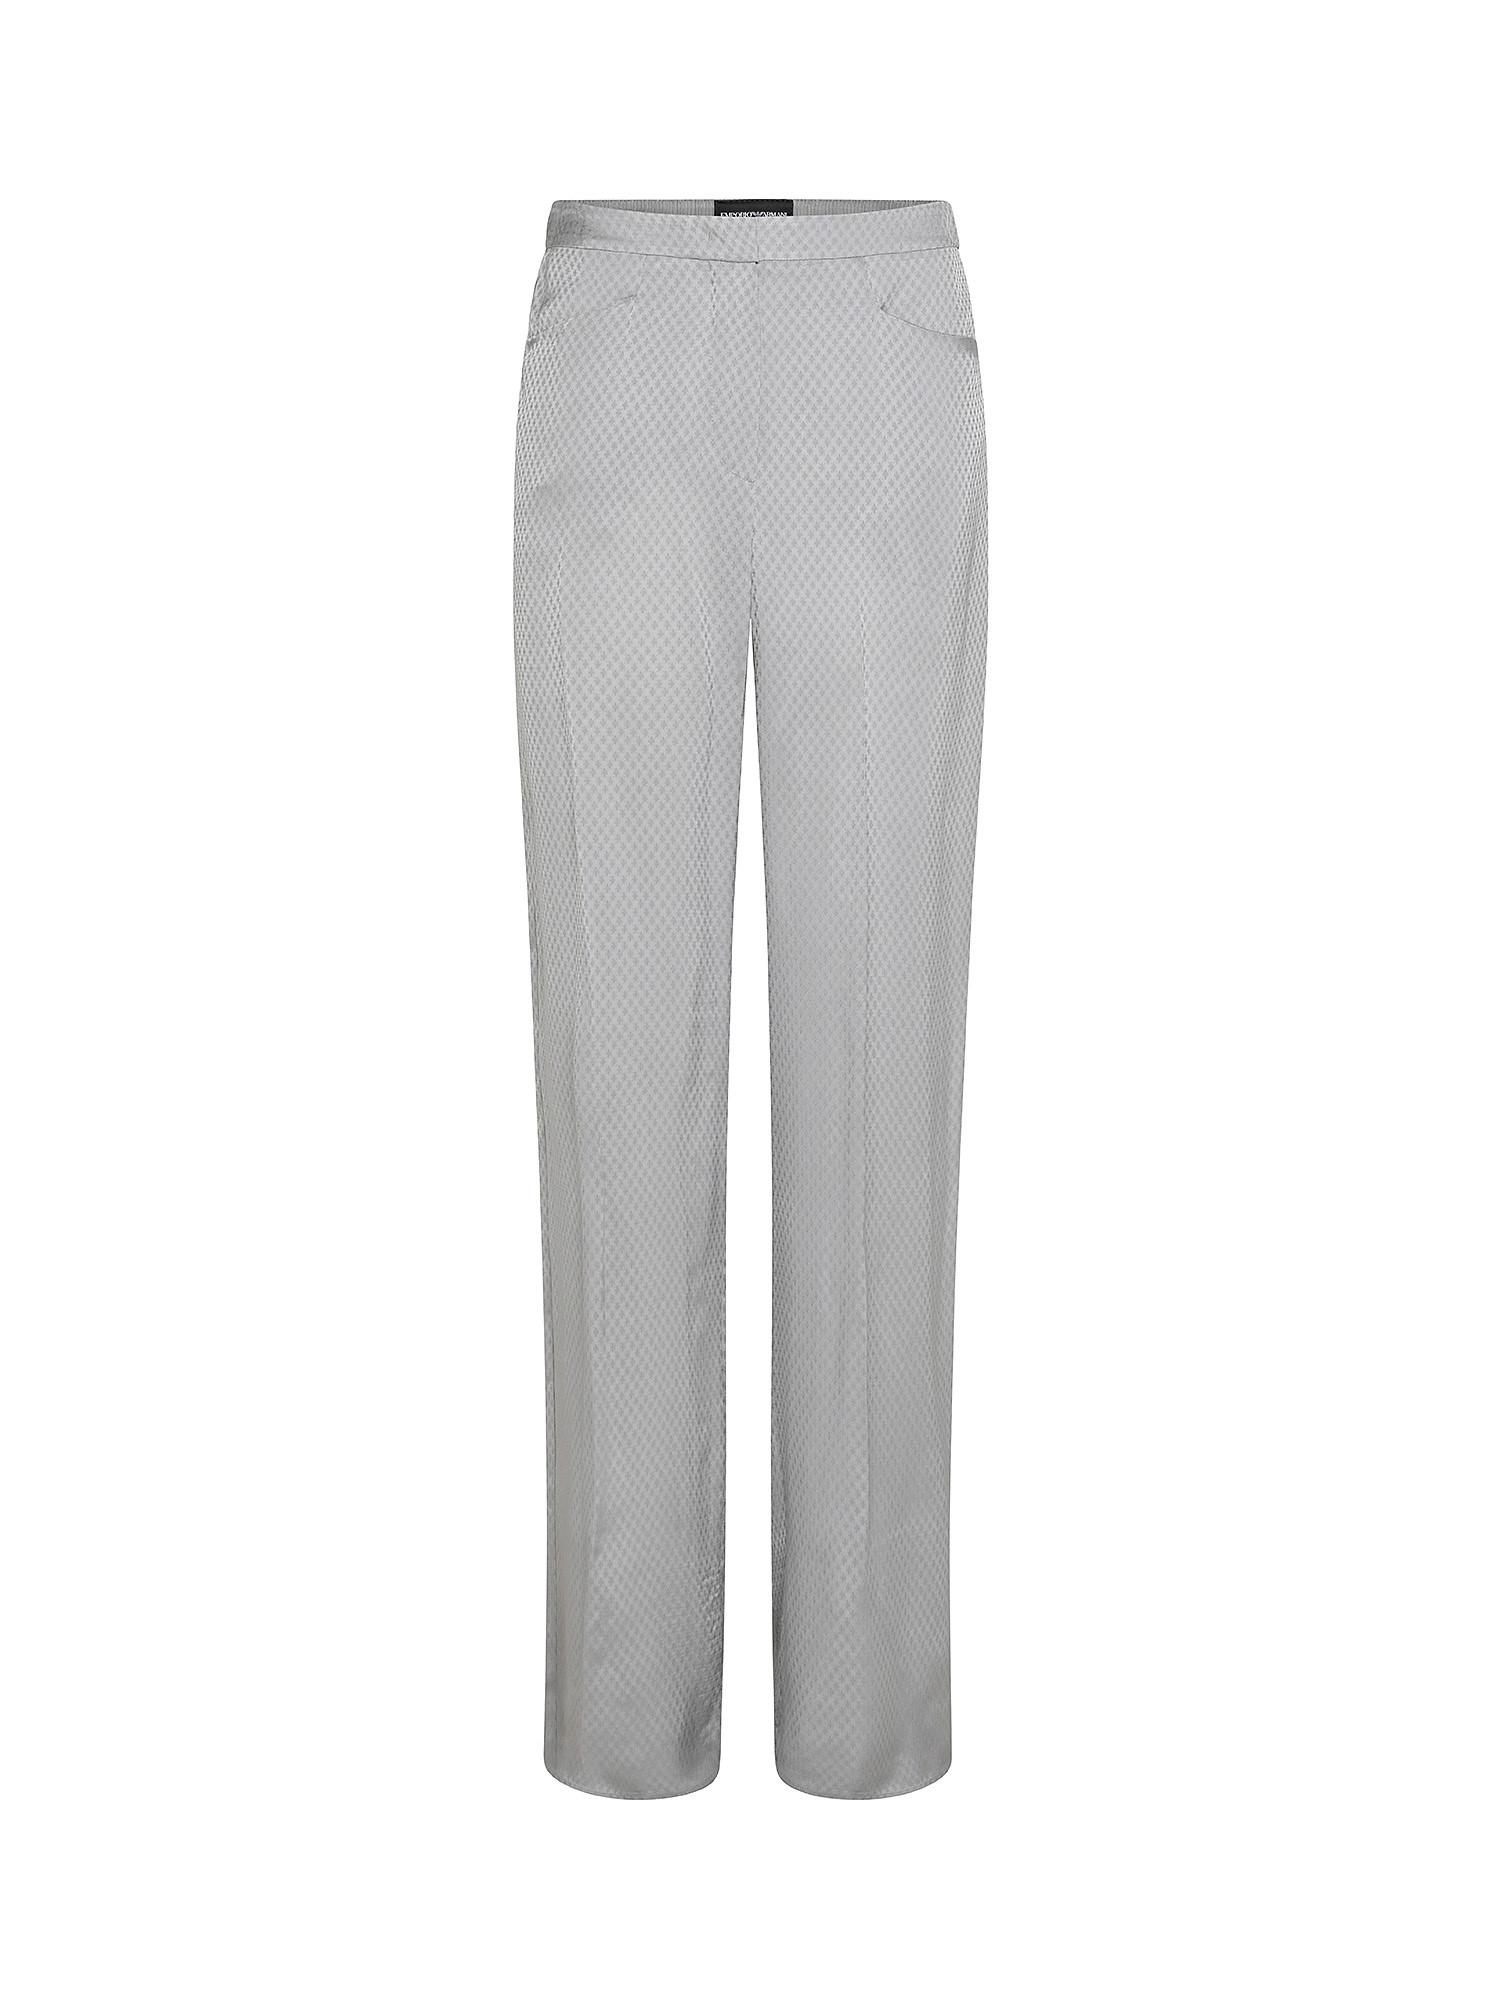 5-pocket trousers, Grey, large image number 0